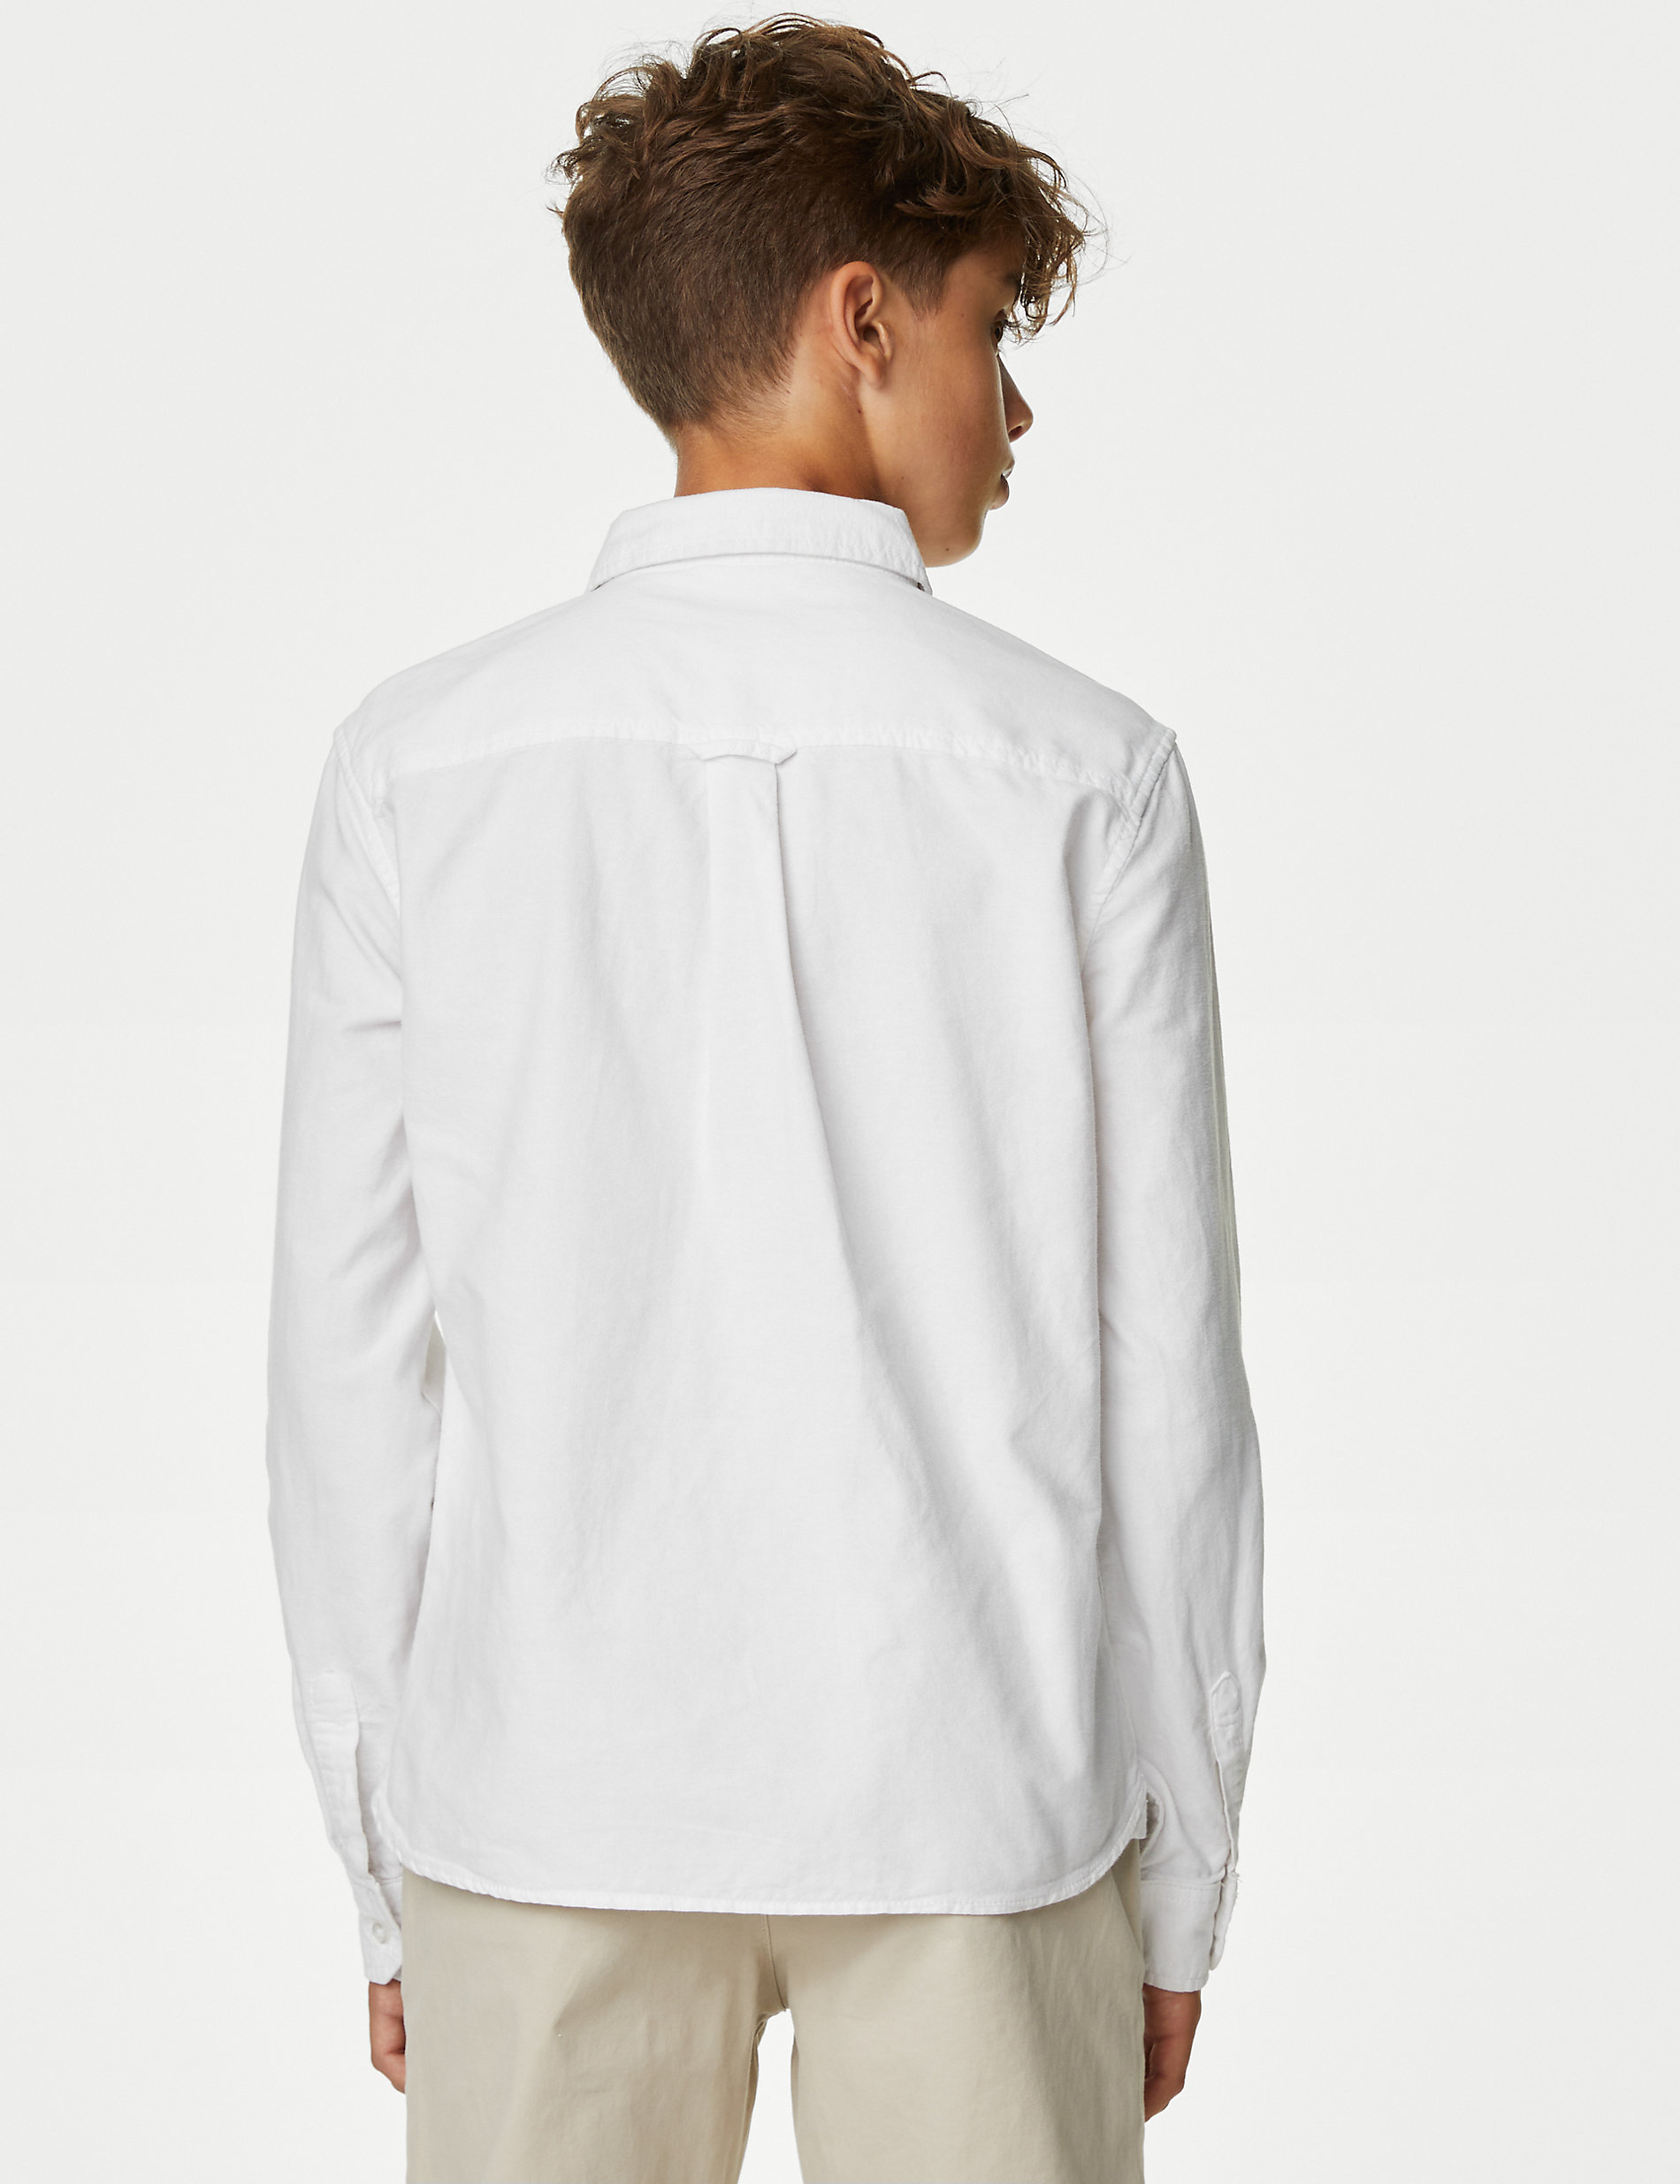 Pure Cotton Oxford Shirt (6-16 Yrs)